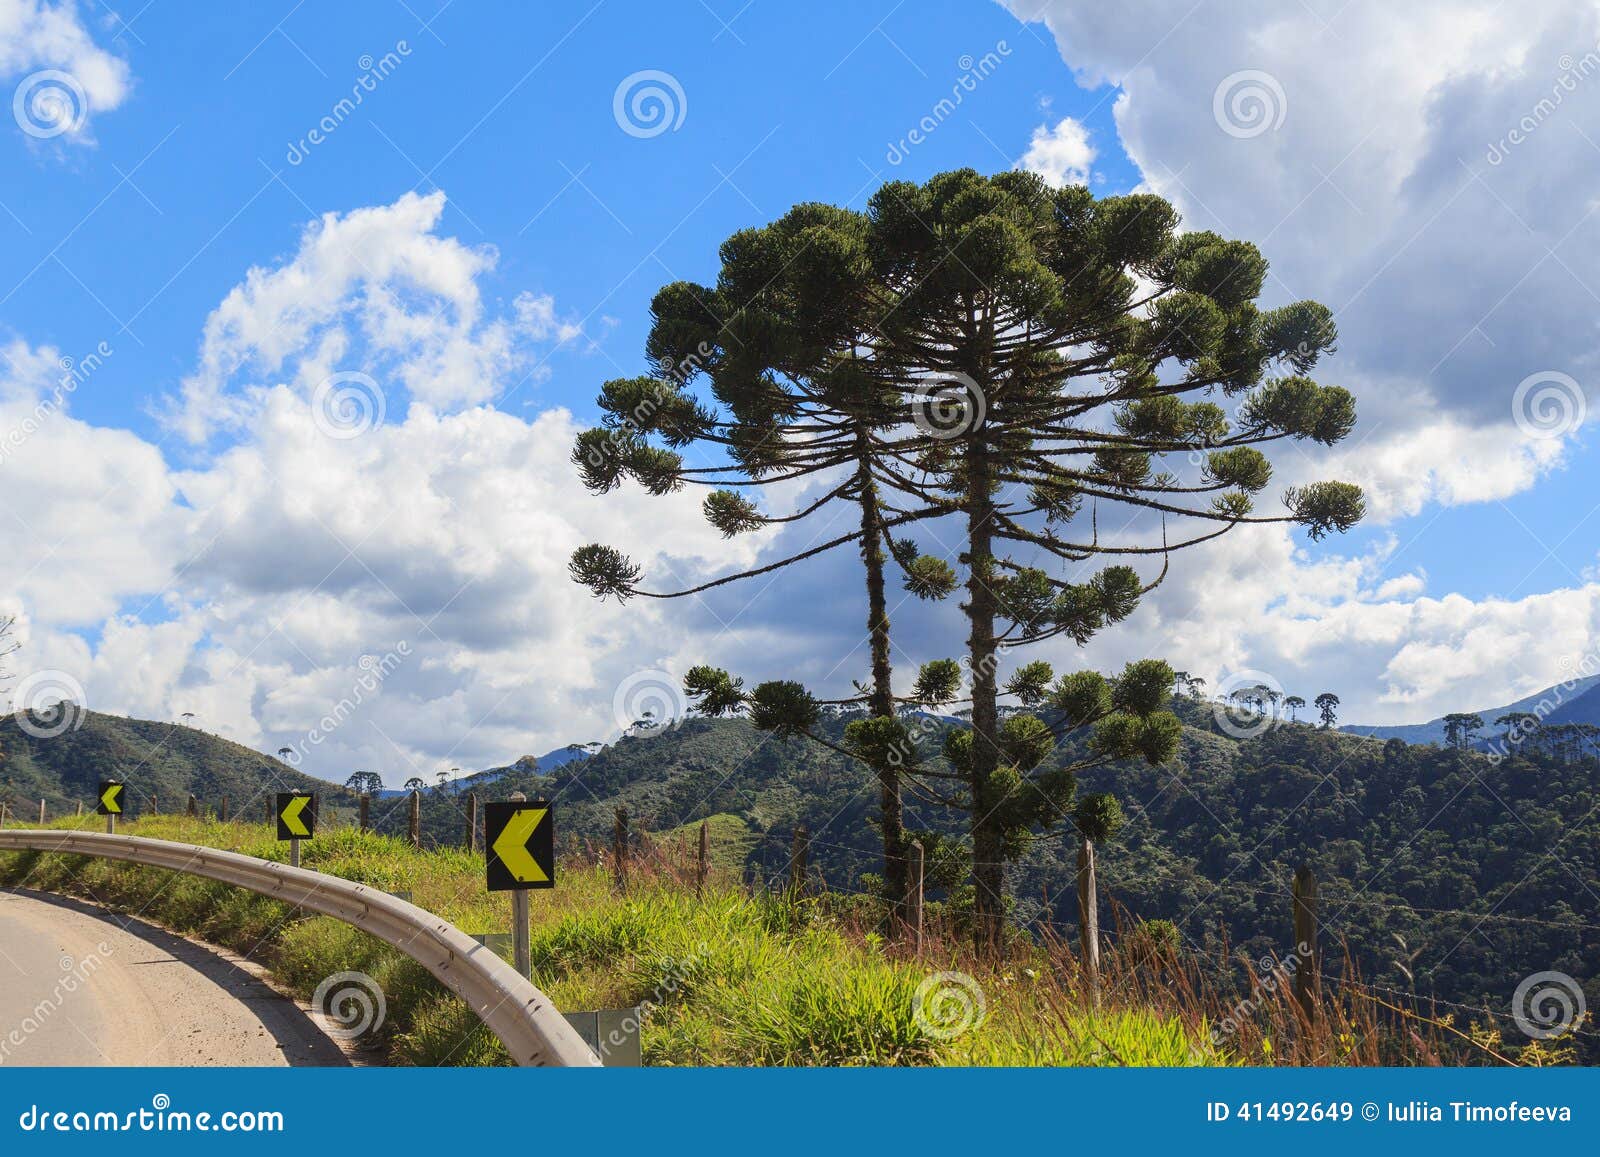 araucaria angustifolia ( brazilian pine) near road